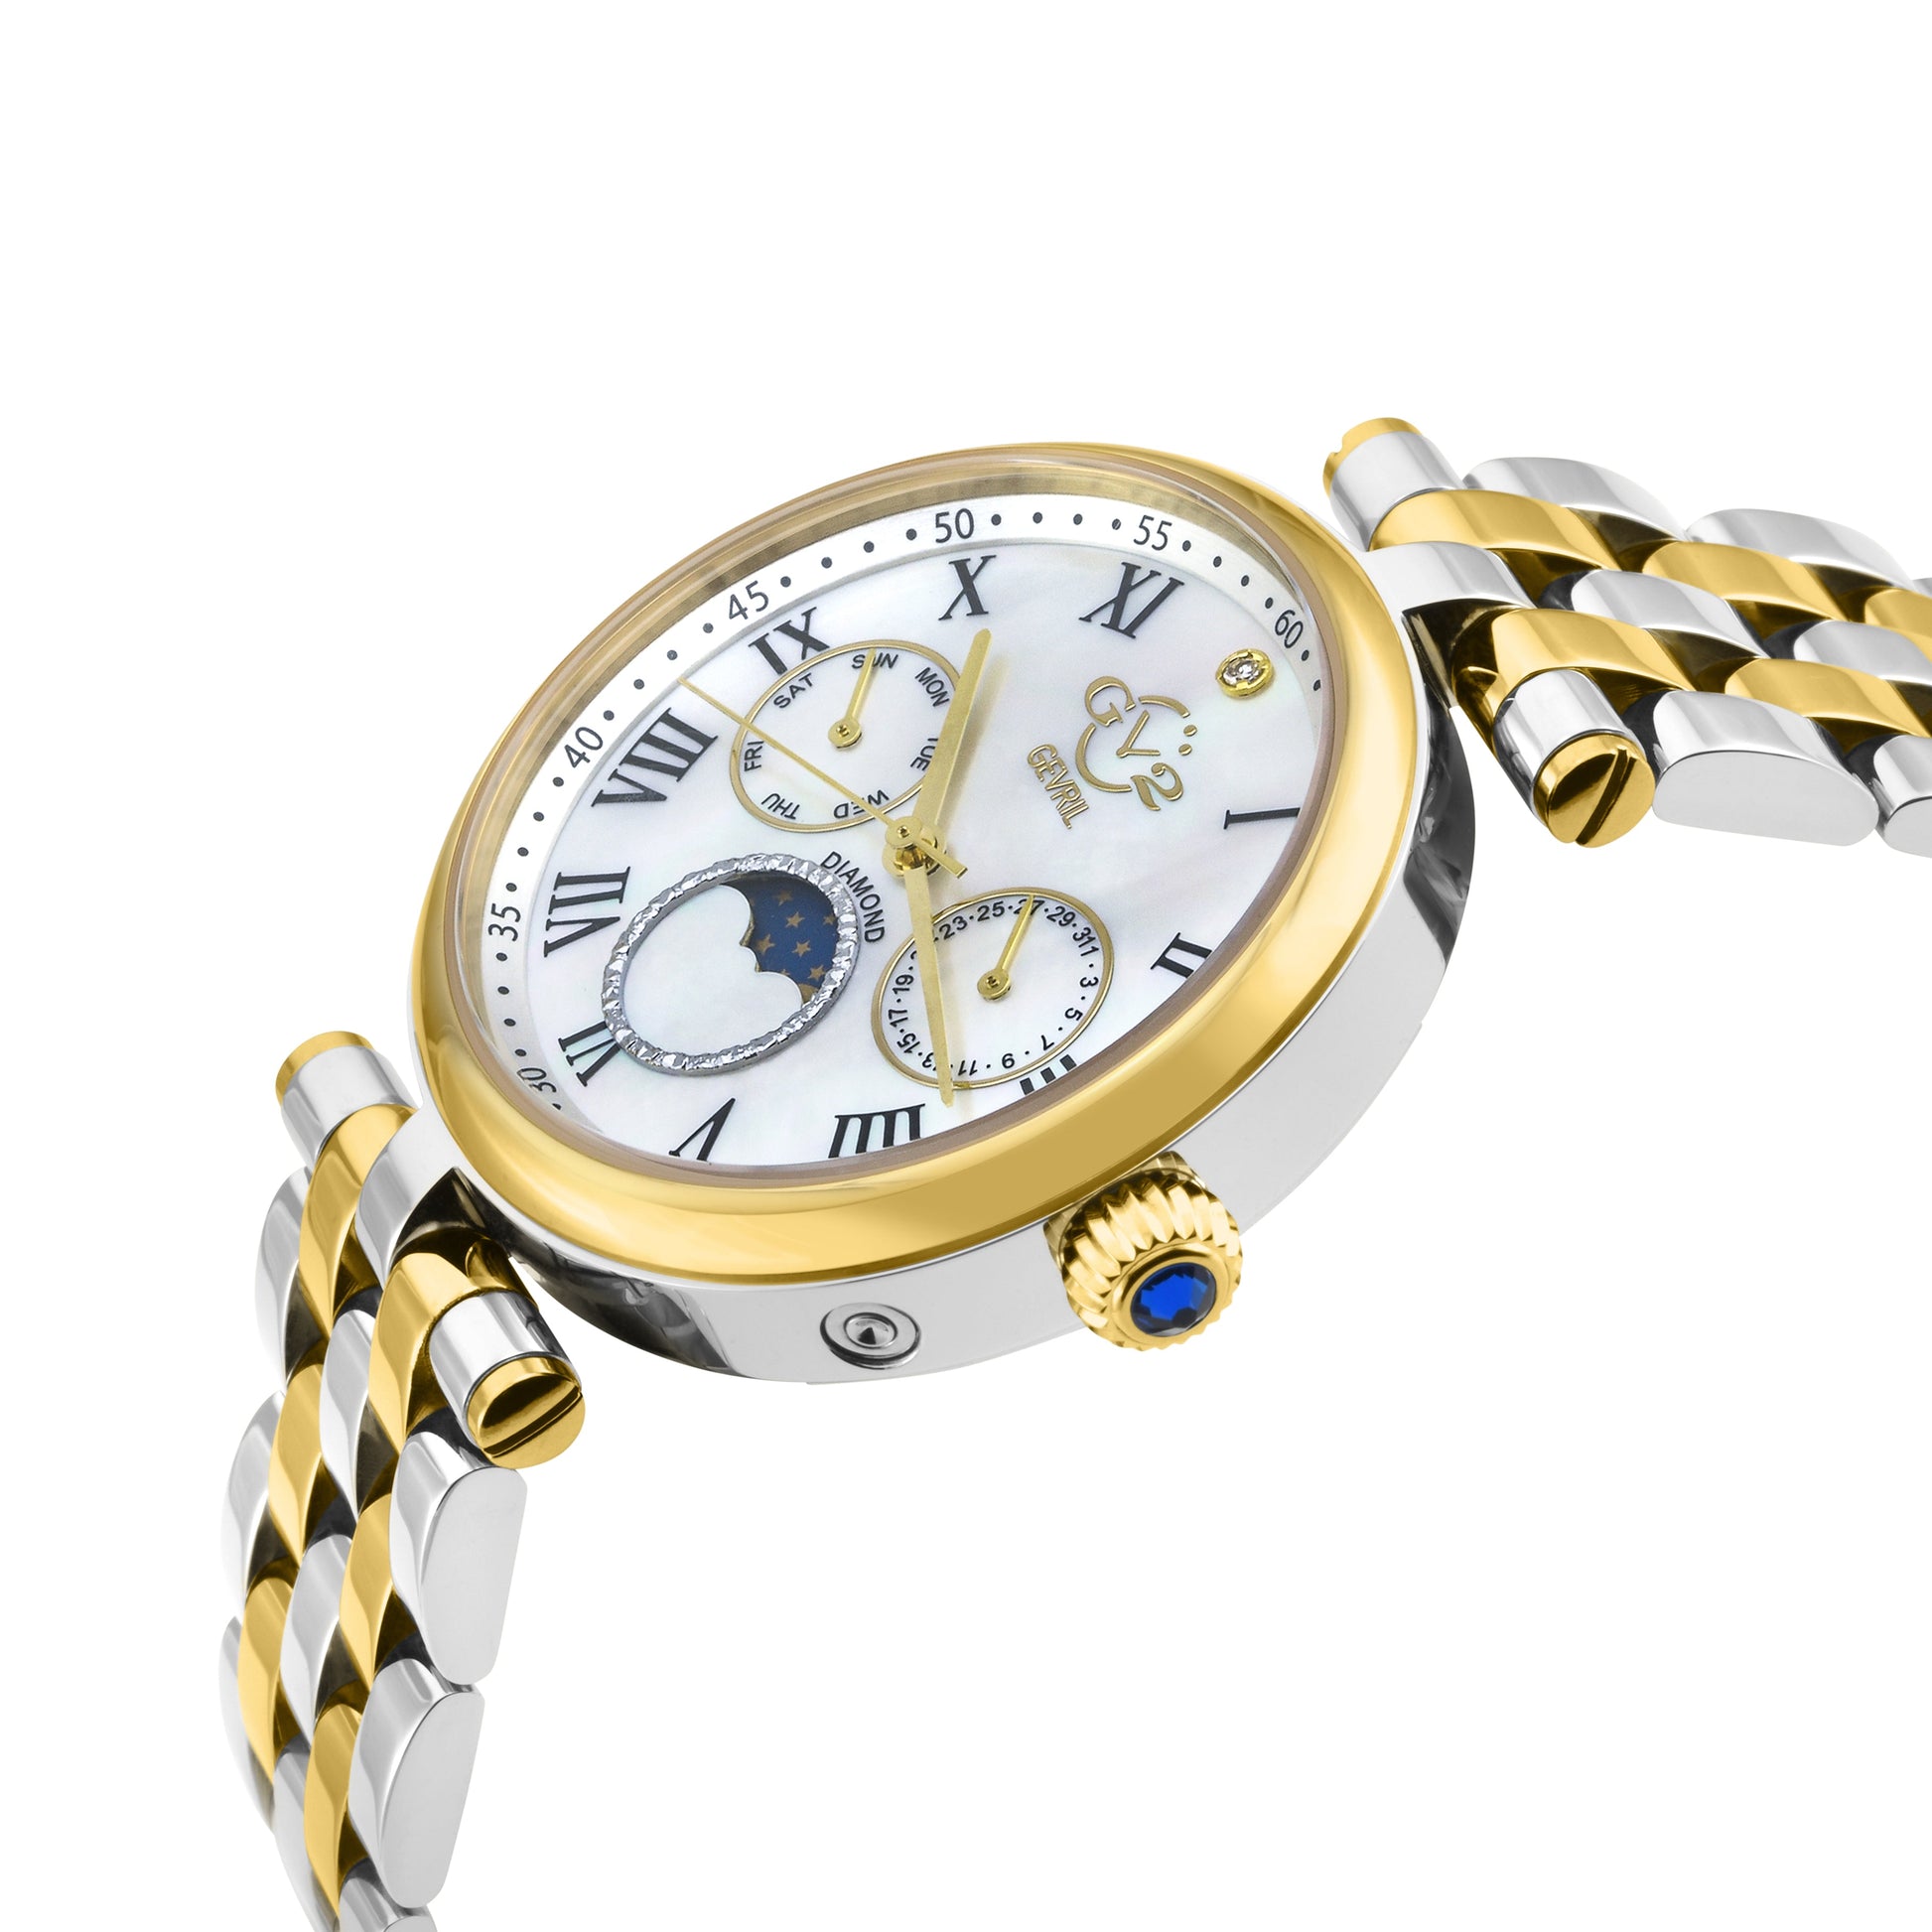 Gevril-Luxury-Swiss-Watches-GV2 Florence Diamond-12515